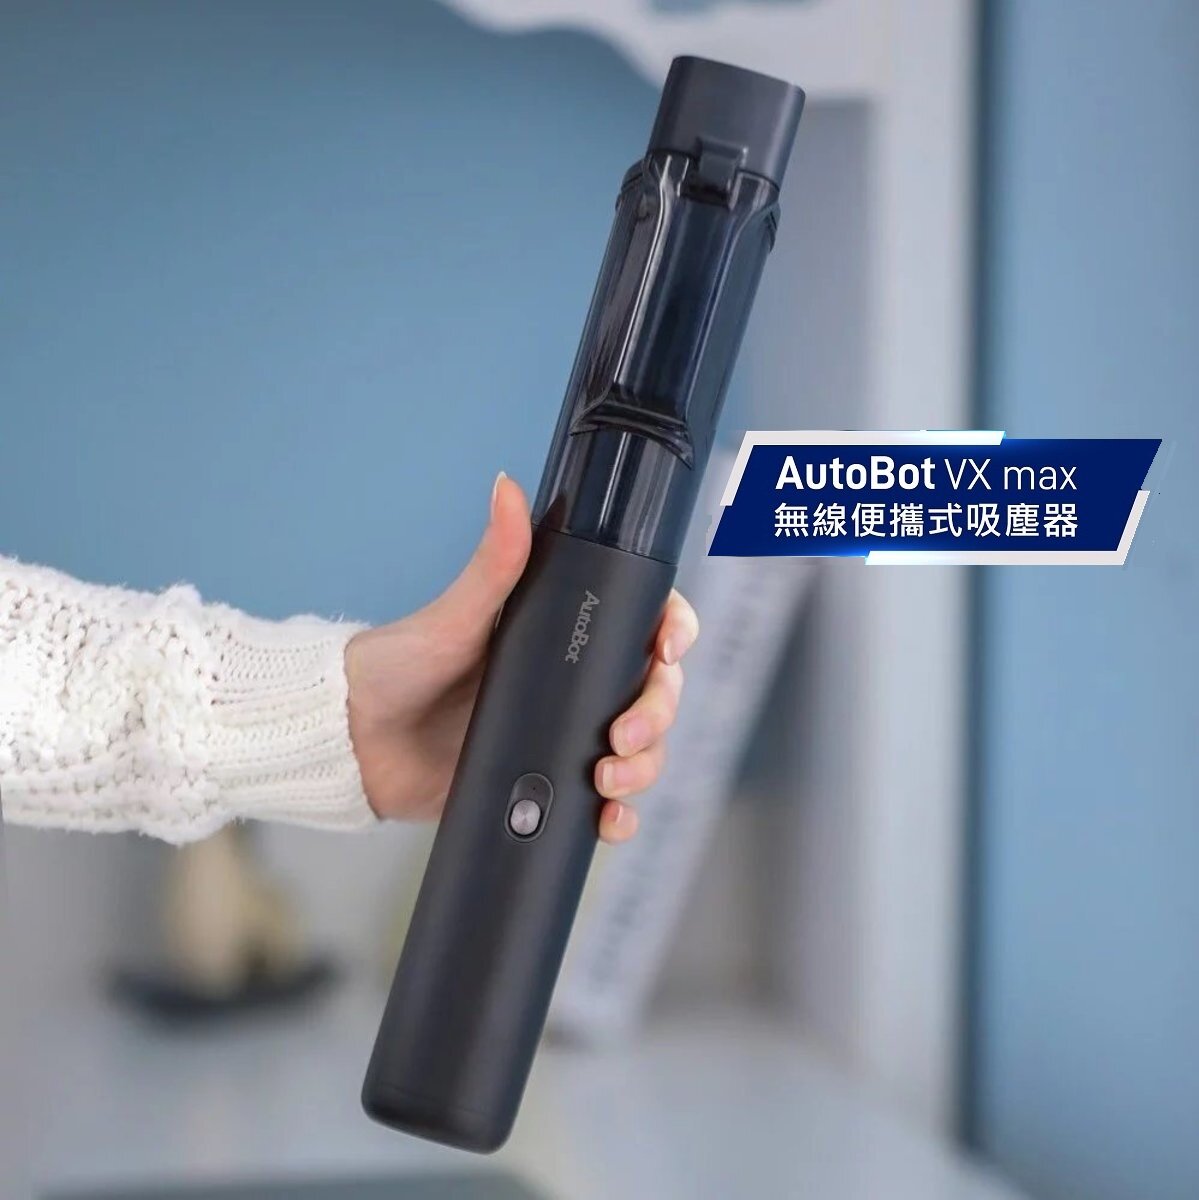 AutoBot - AutoBot VX max Cordless Portable Vacuum Cleaner - Standard Edition